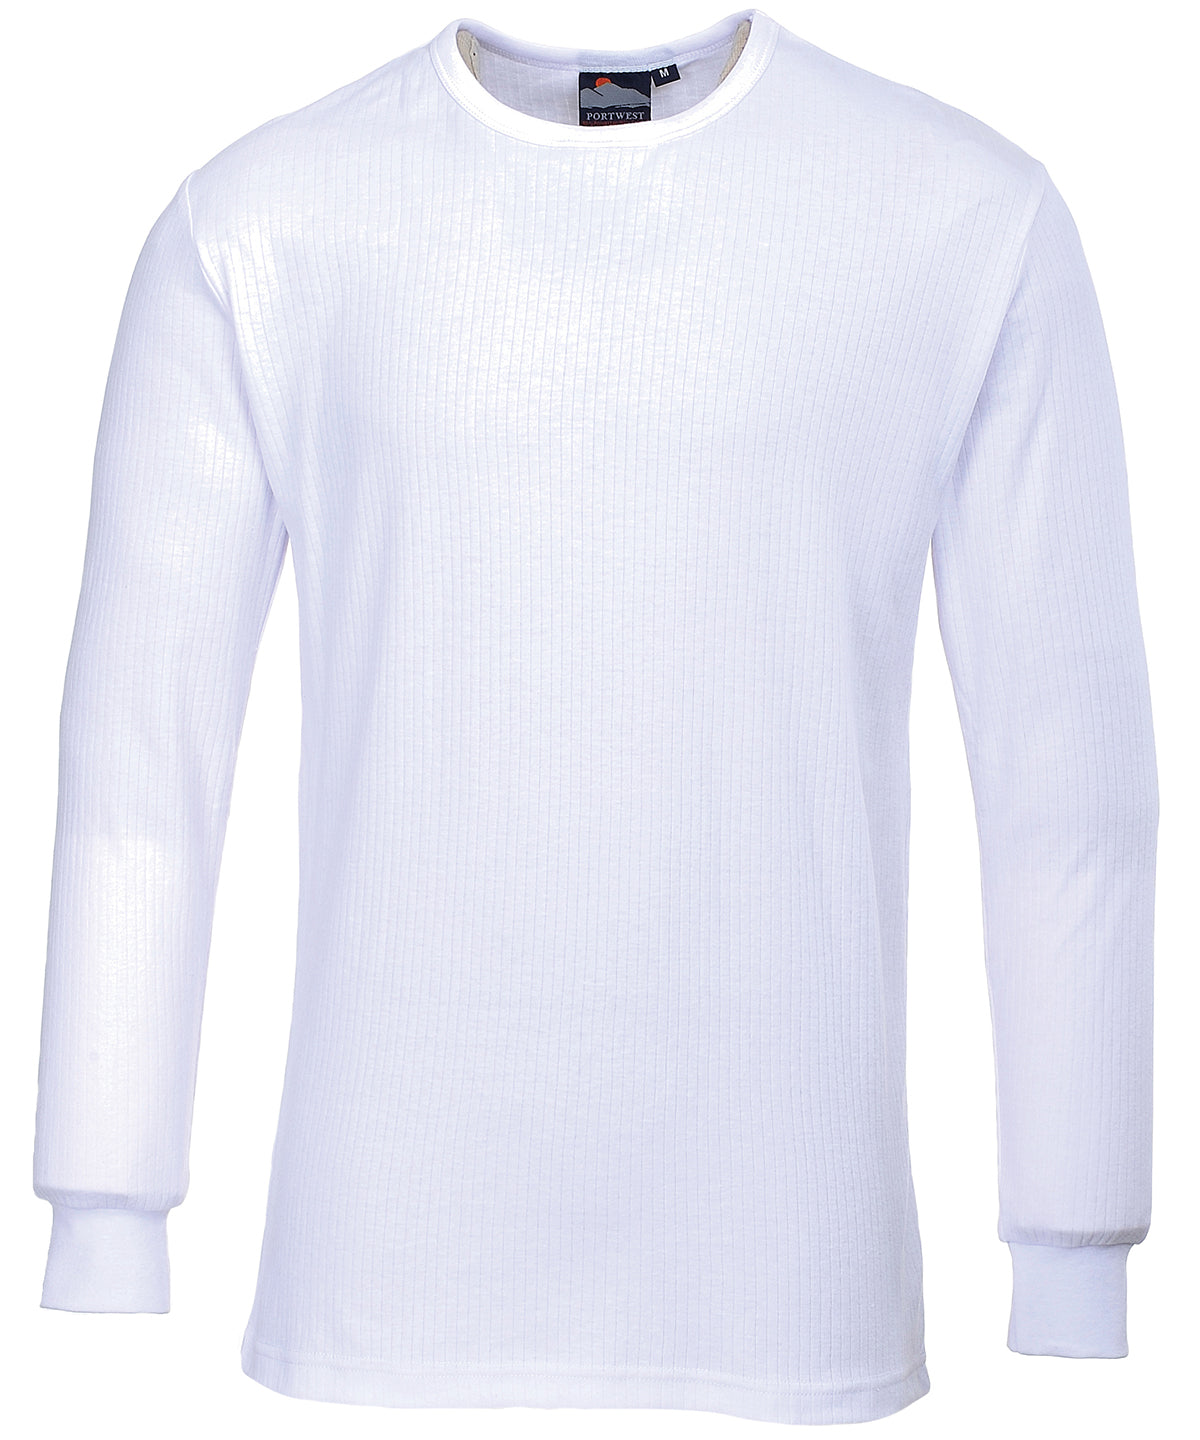 Thermal Tops - Thermal T-shirt Long Sleeved (B123)